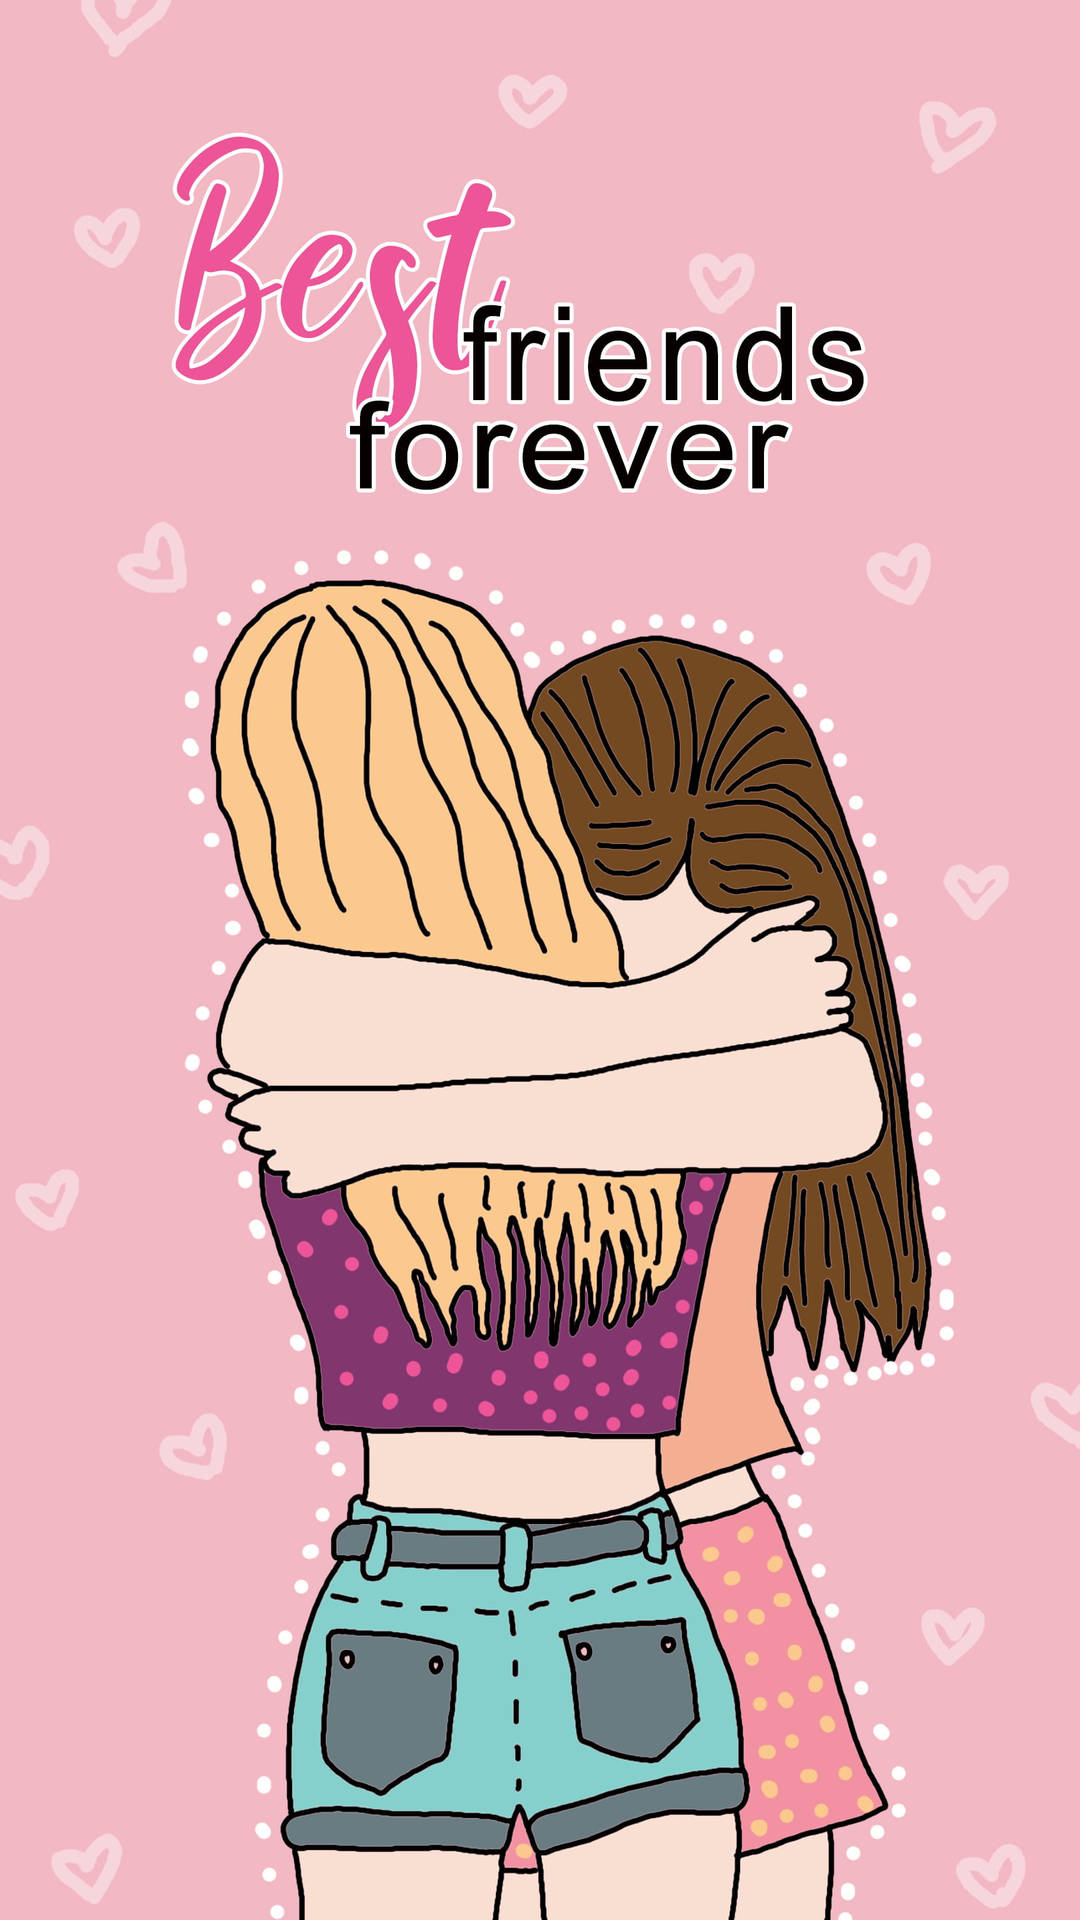 Free Best Friends Forever Wallpaper Downloads, [100+] Best Friends Forever  Wallpapers for FREE 